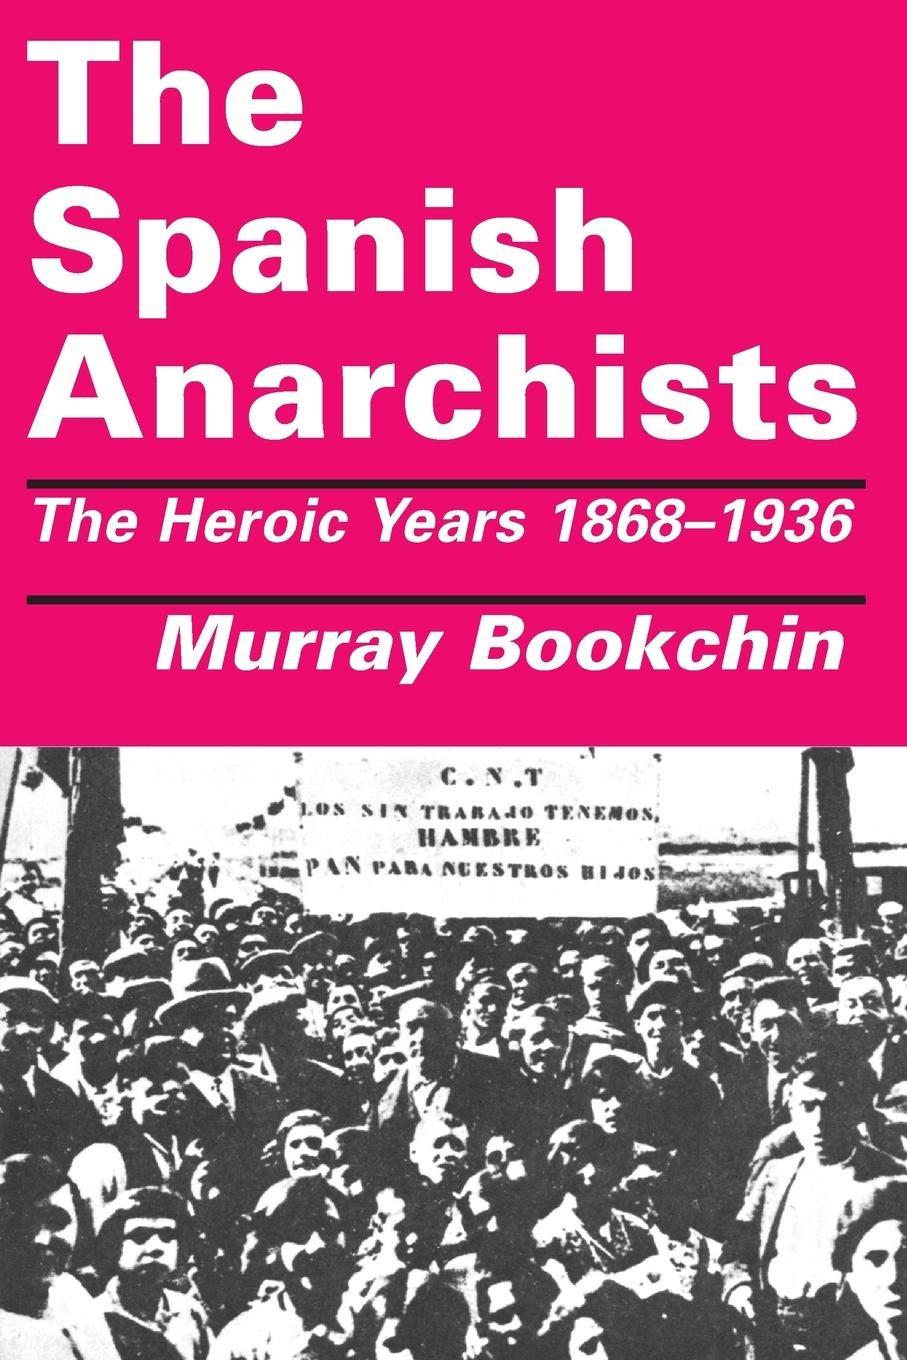 m-b-murray-bookchin-the-spanish-anarchists-1.jpg